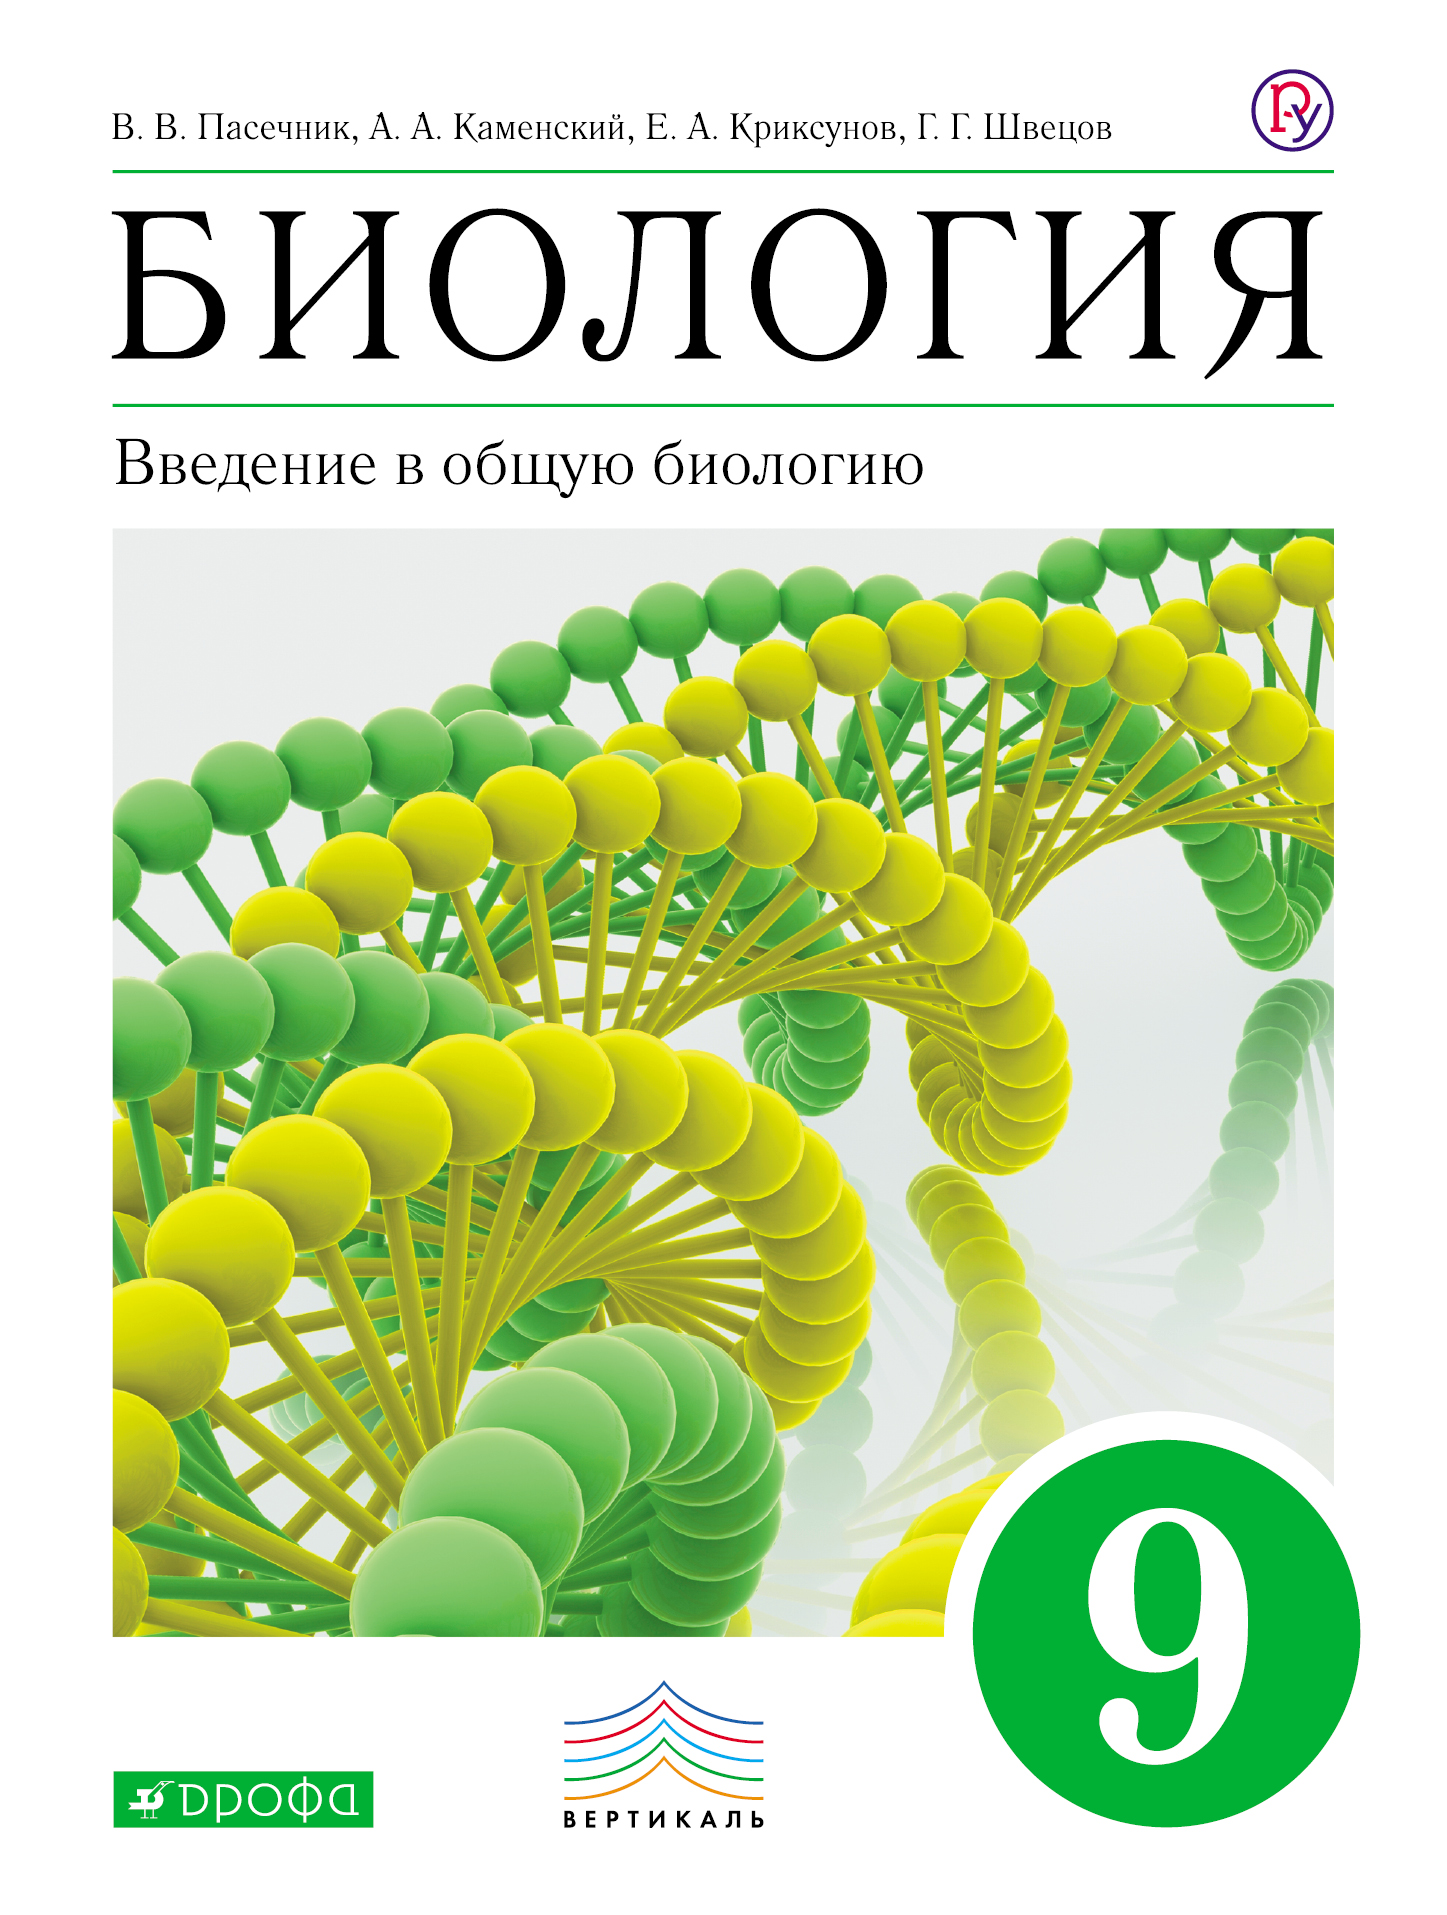 Биология каменский 10-11 онлайн учебник